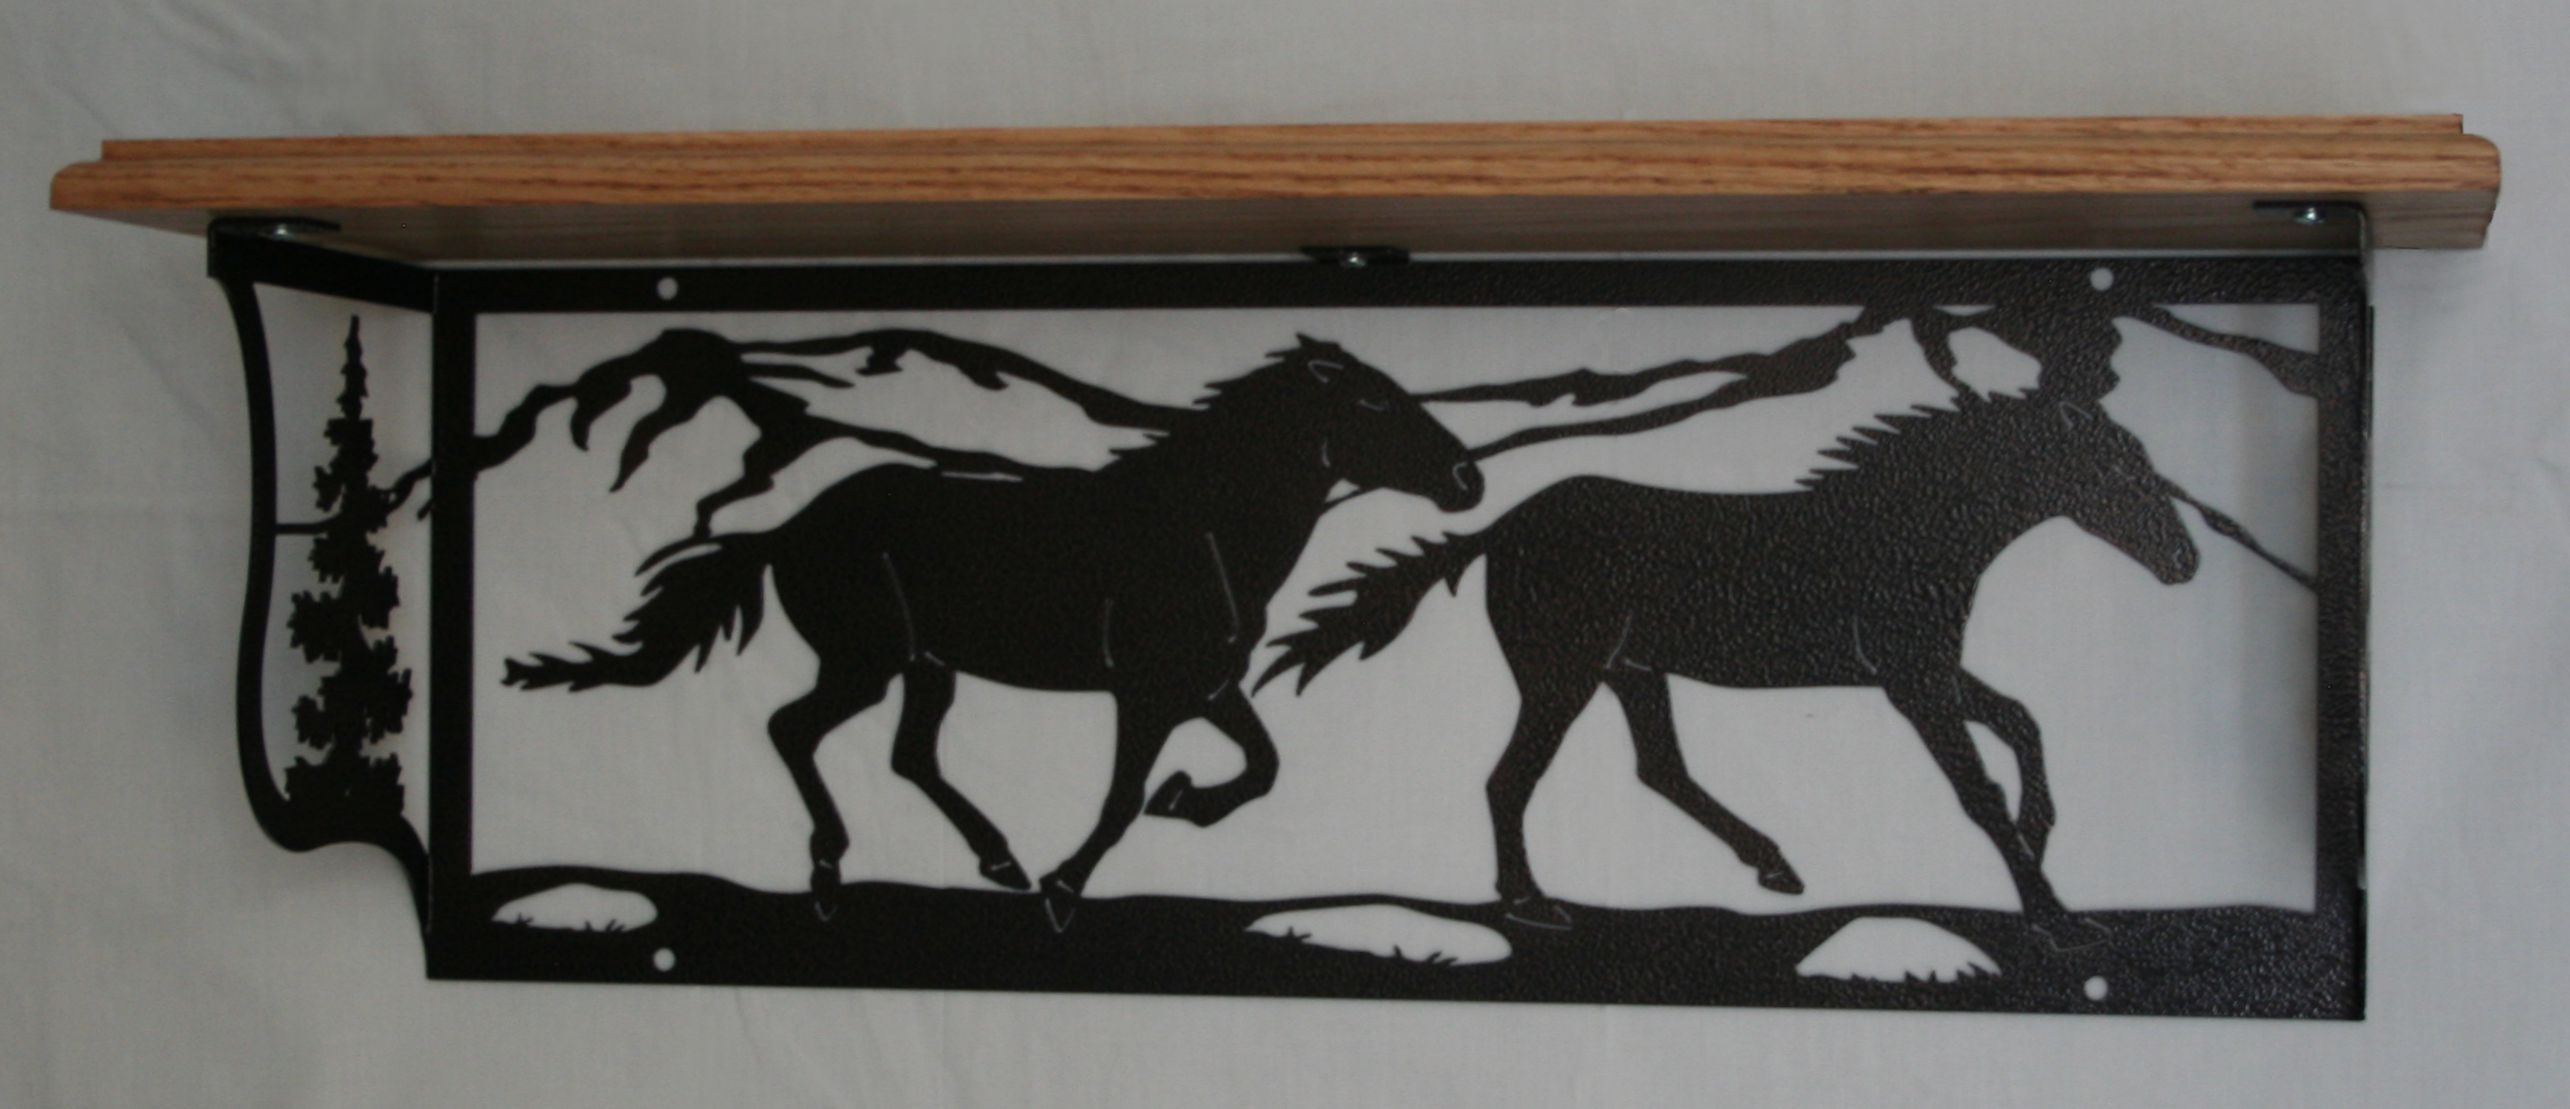 Metal Art, Oak Wood Shelf, Metal Shelf, Running Horses, Trees, Mountains